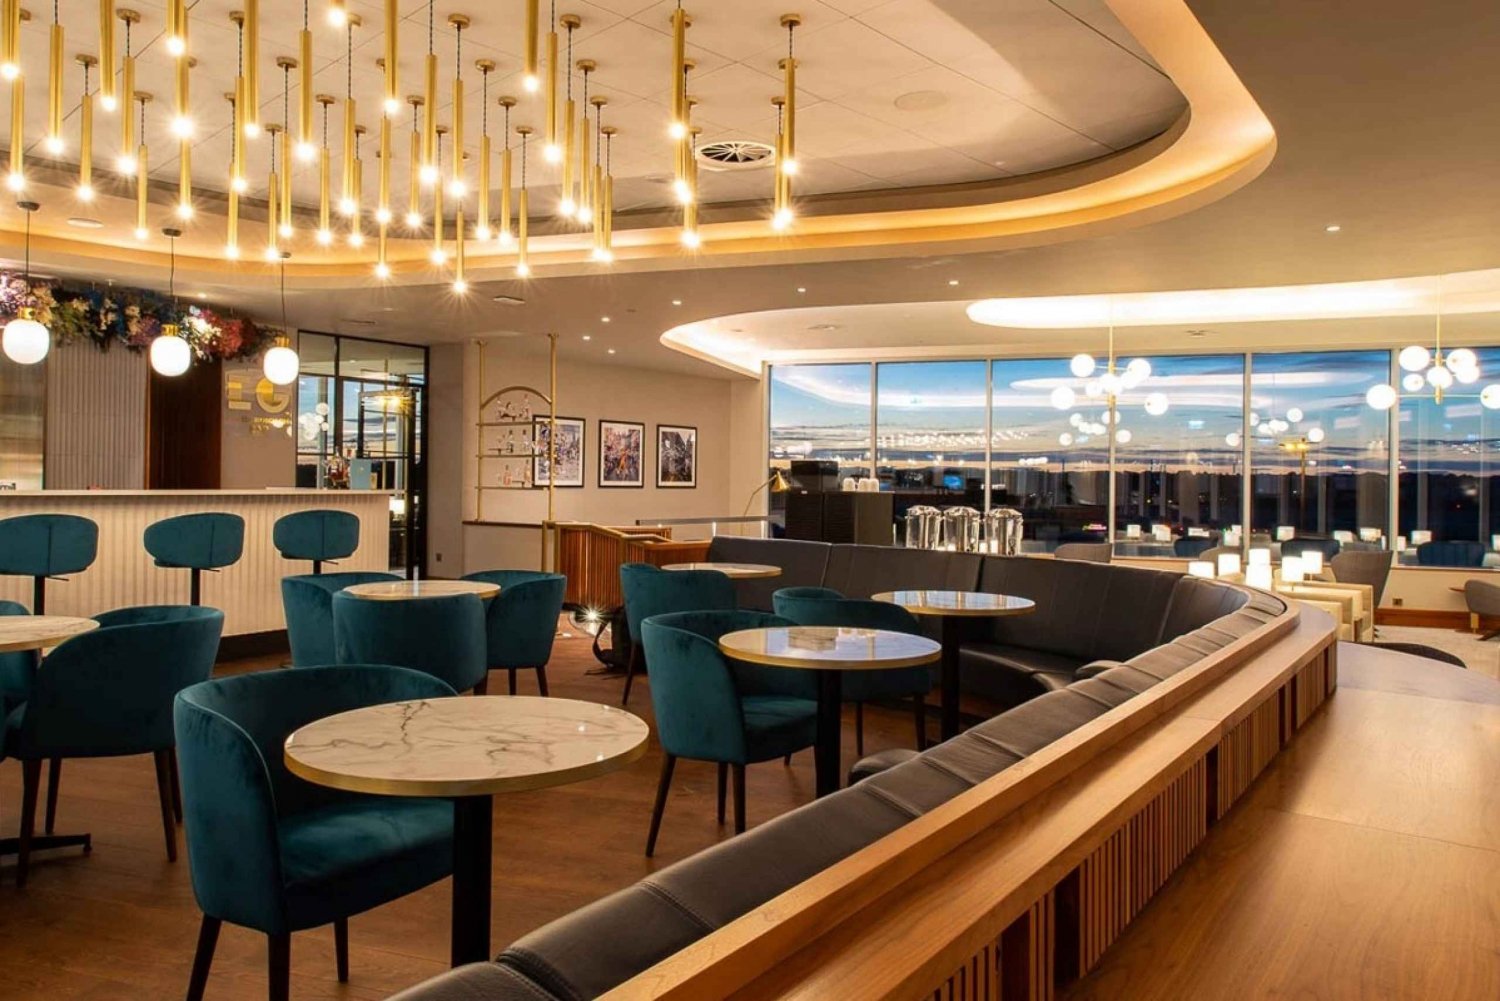 EDI Aeropuerto de Edimburgo: Plaza Premium Lounge